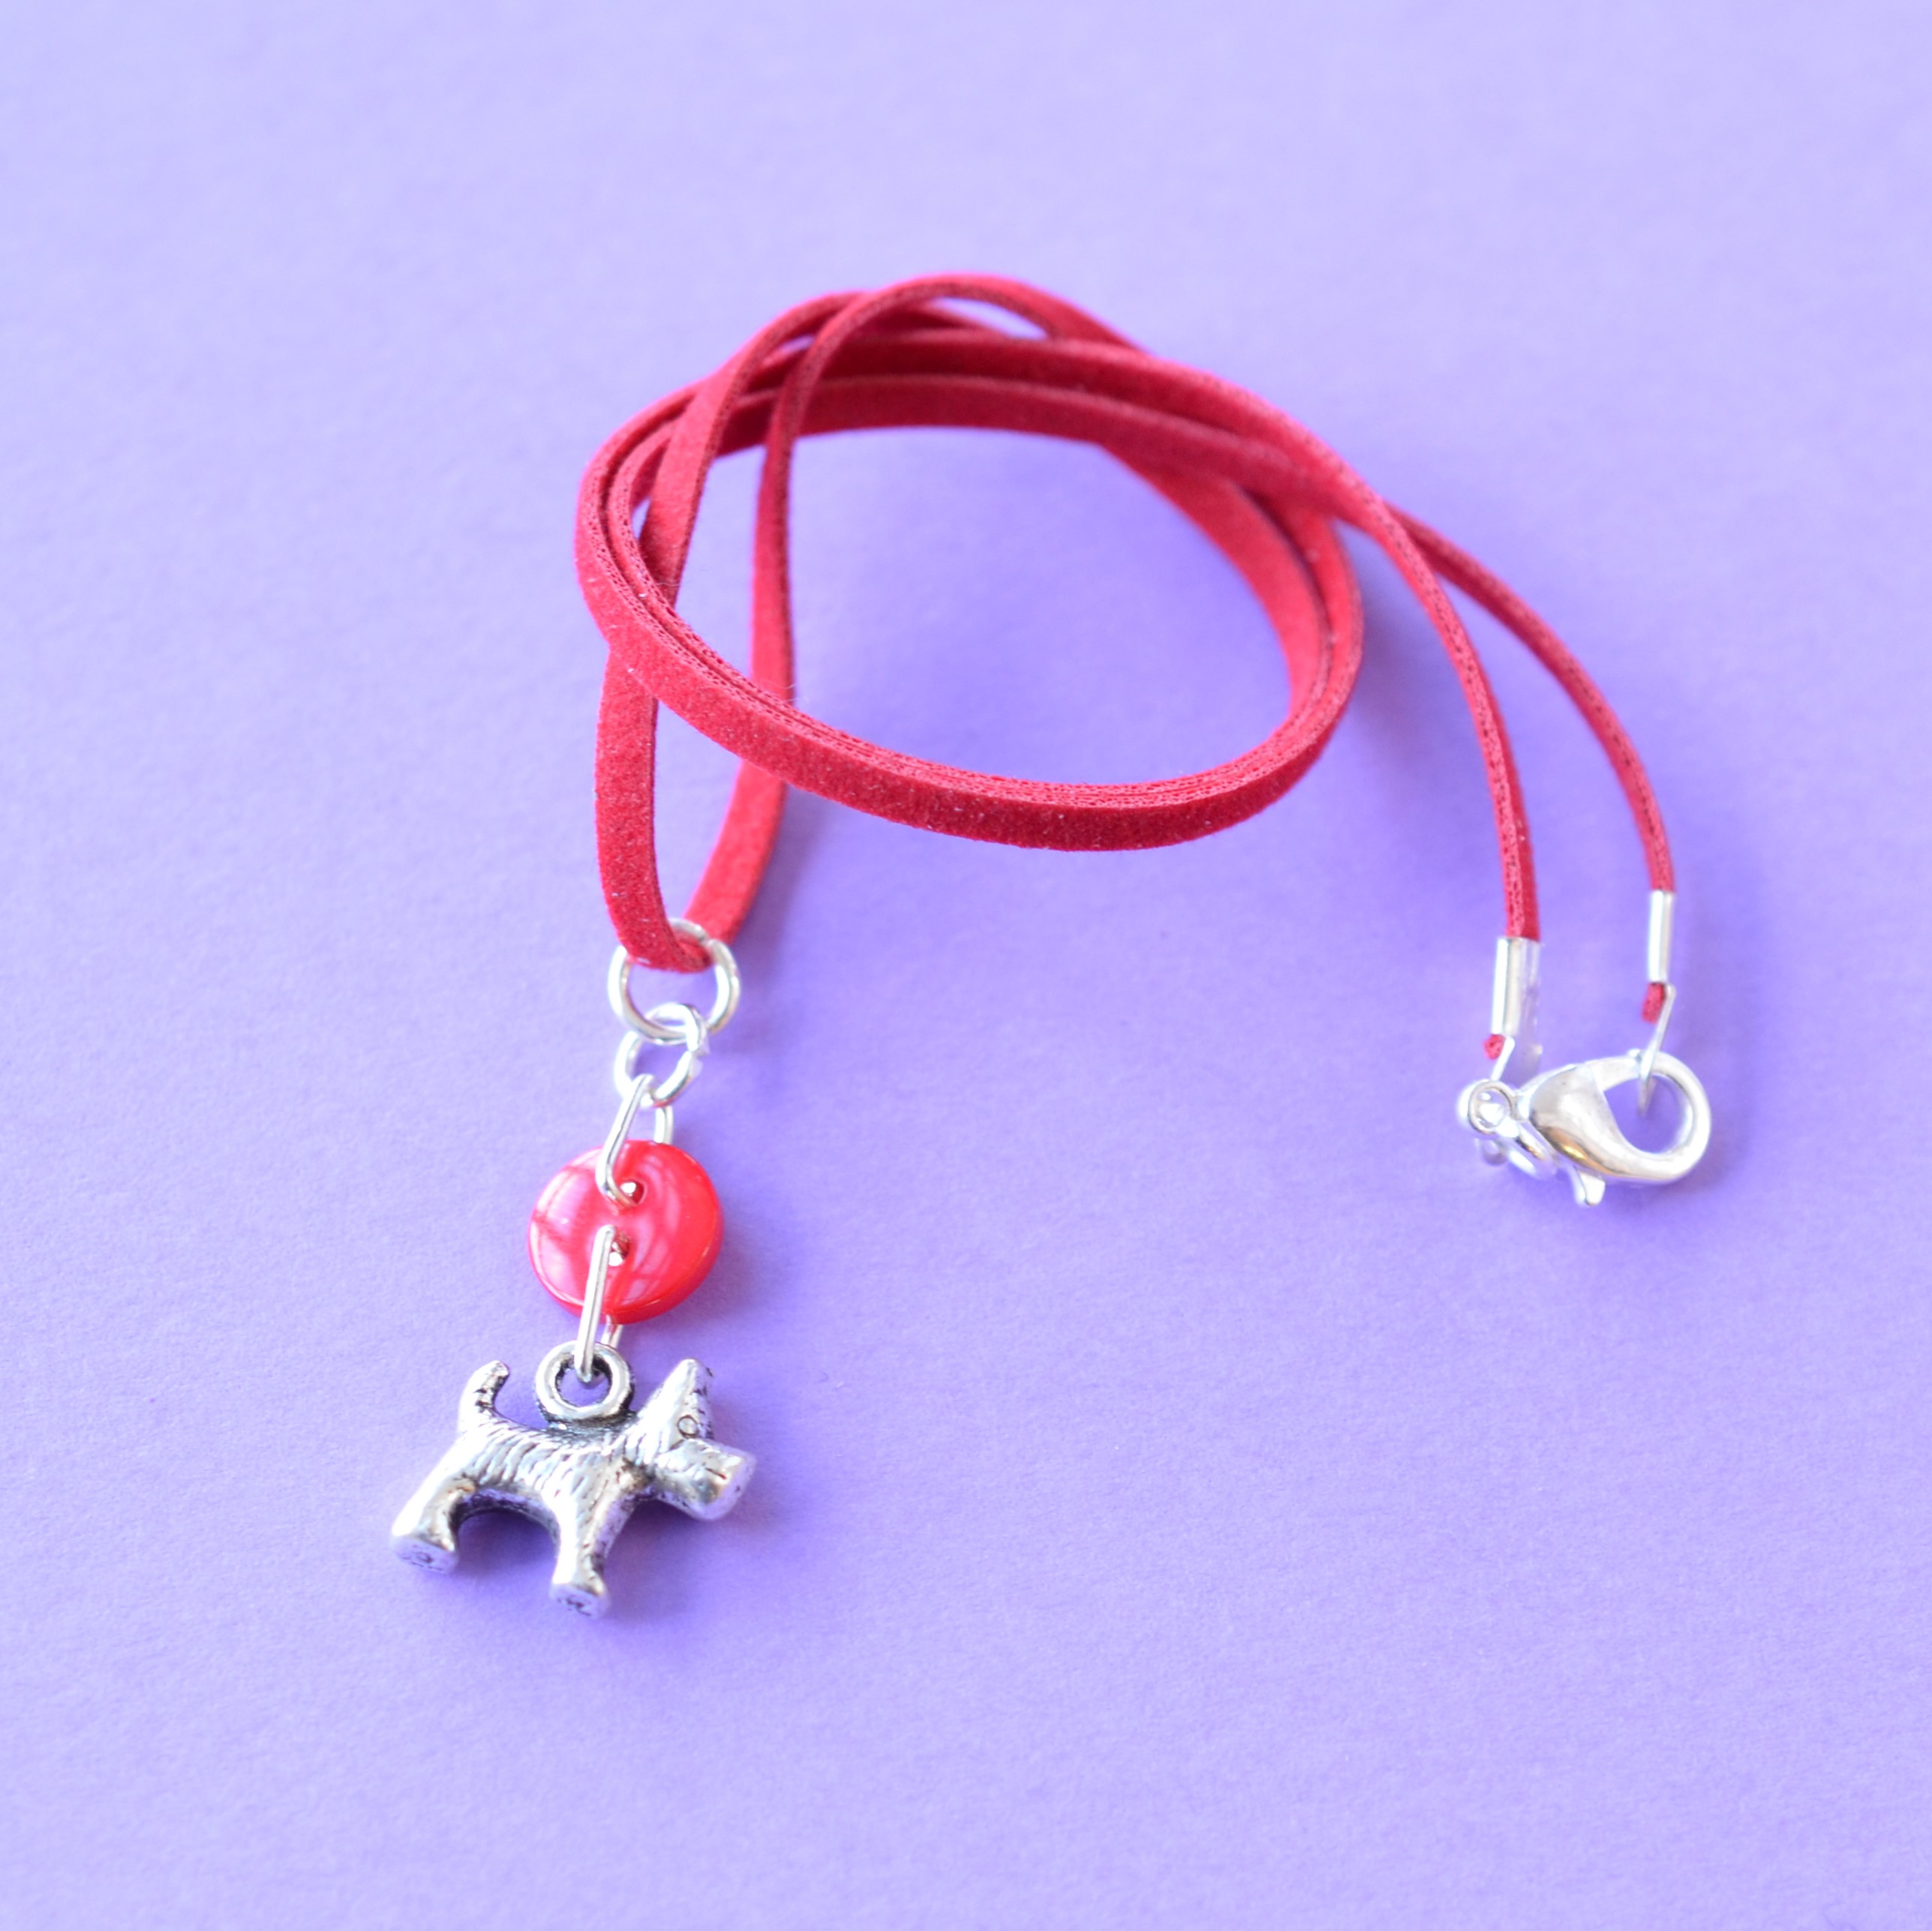 Dog Child’s Button Charm Necklace